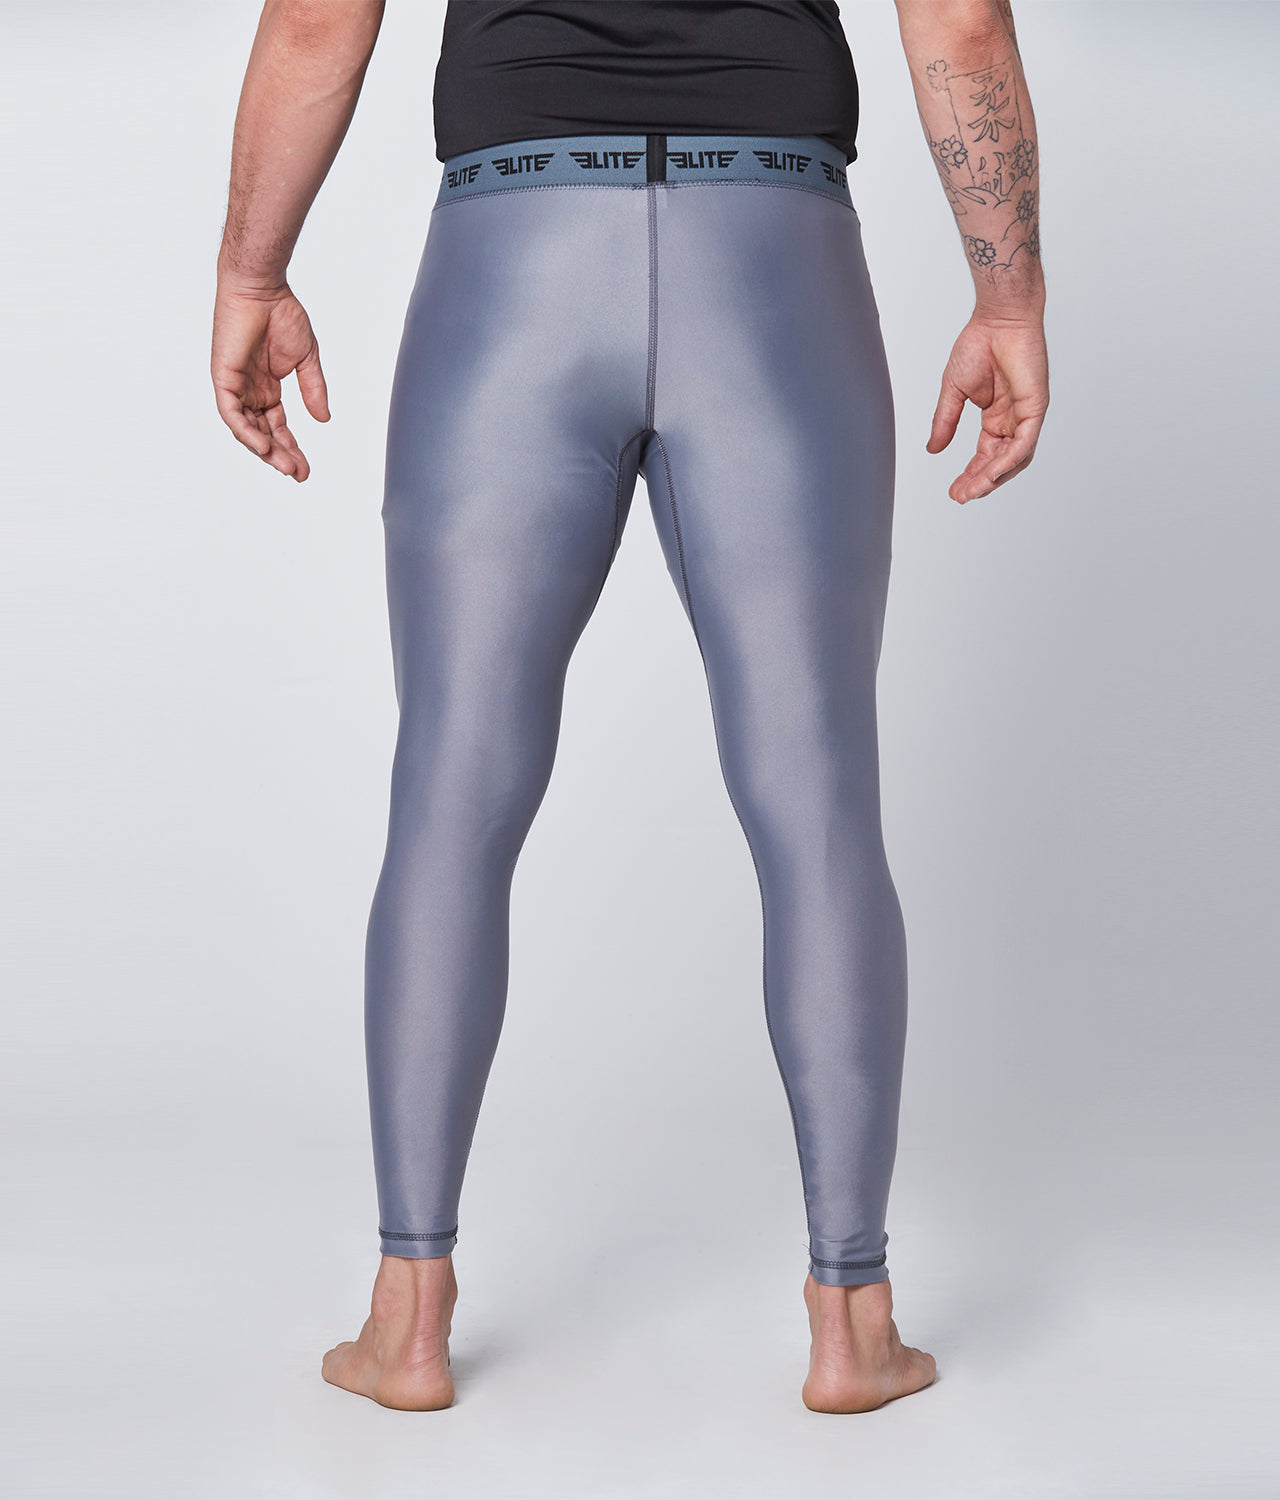 Elite Sports Plain Gray Compression Judo Spat Pants